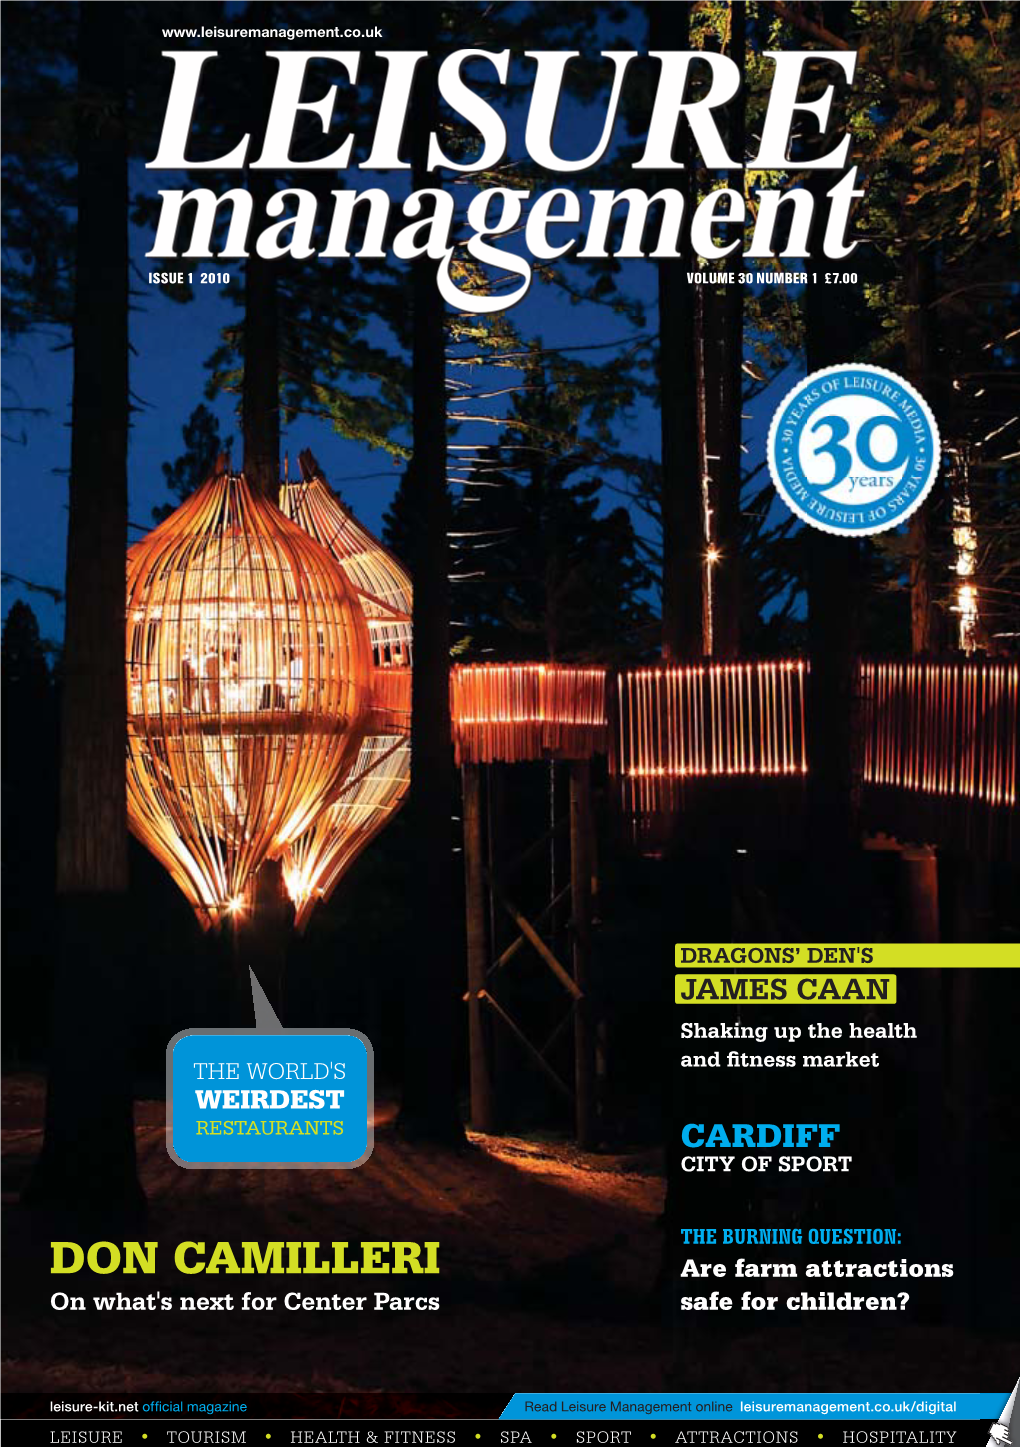 Leisure Management Issue 1 2010